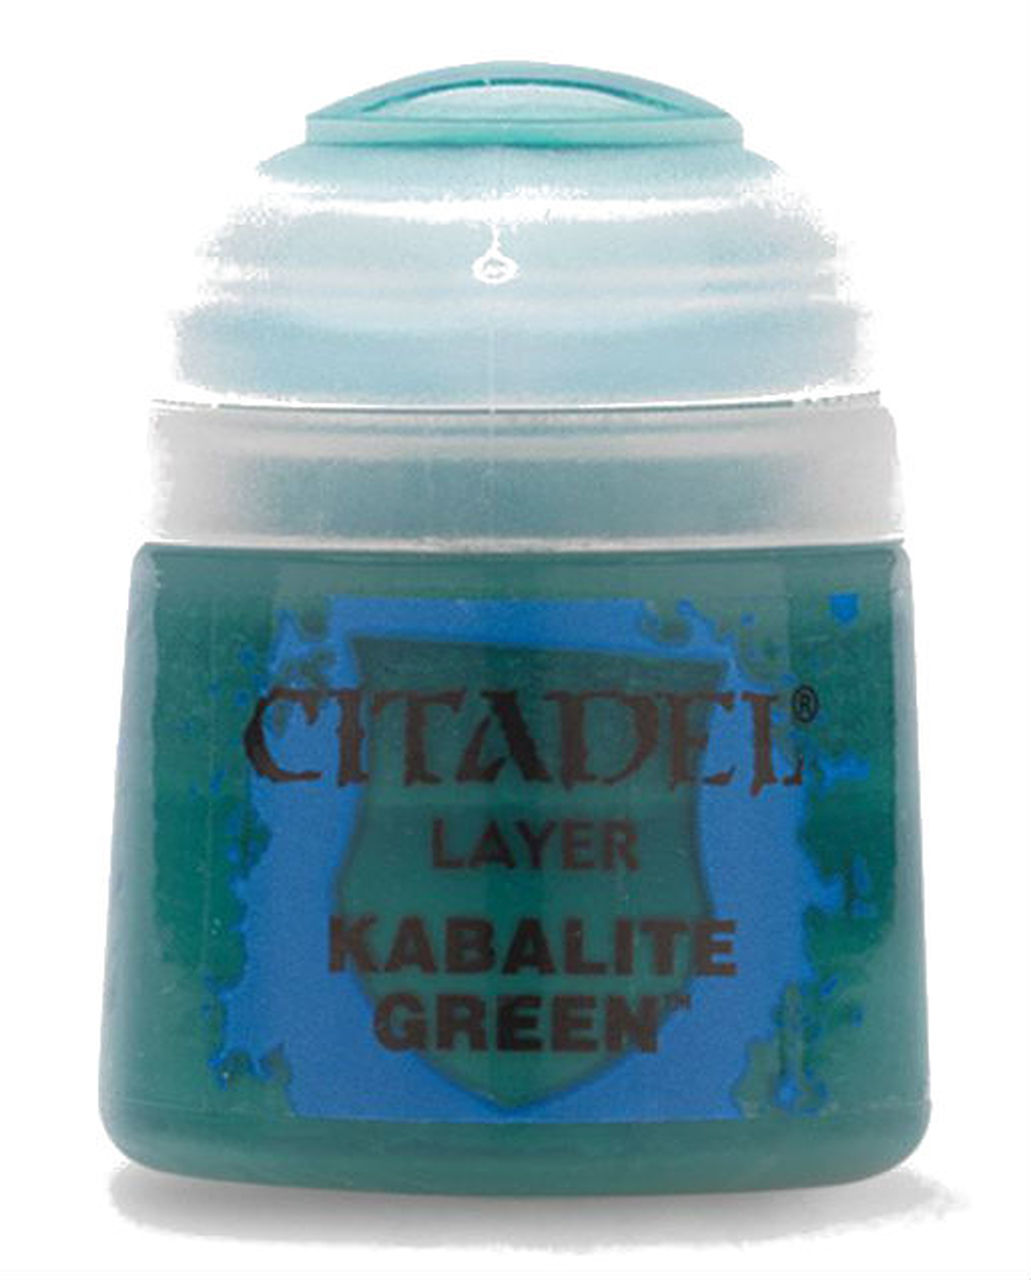 Citadel Paint: Layer - Kabalite Green